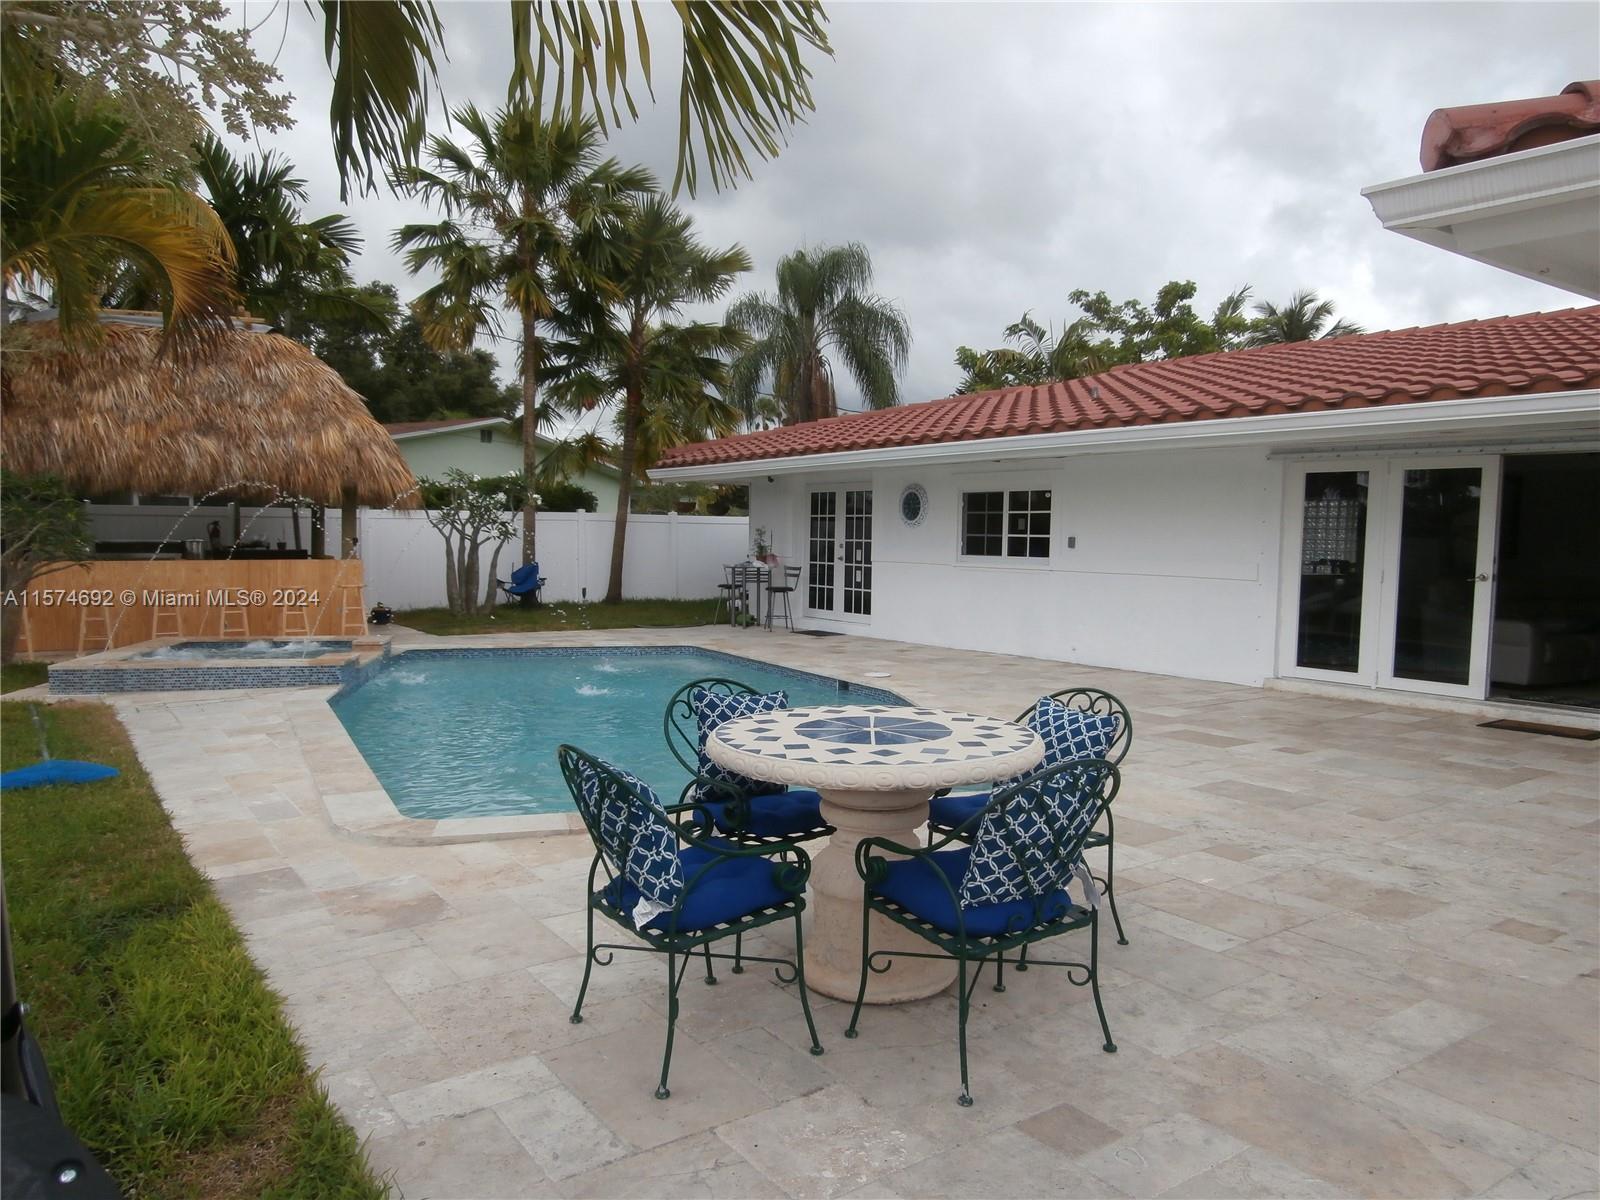 Property for Sale at 20235 Highland Lakes Blvd Blvd, Miami, Broward County, Florida - Bedrooms: 5 
Bathrooms: 3  - $1,589,000